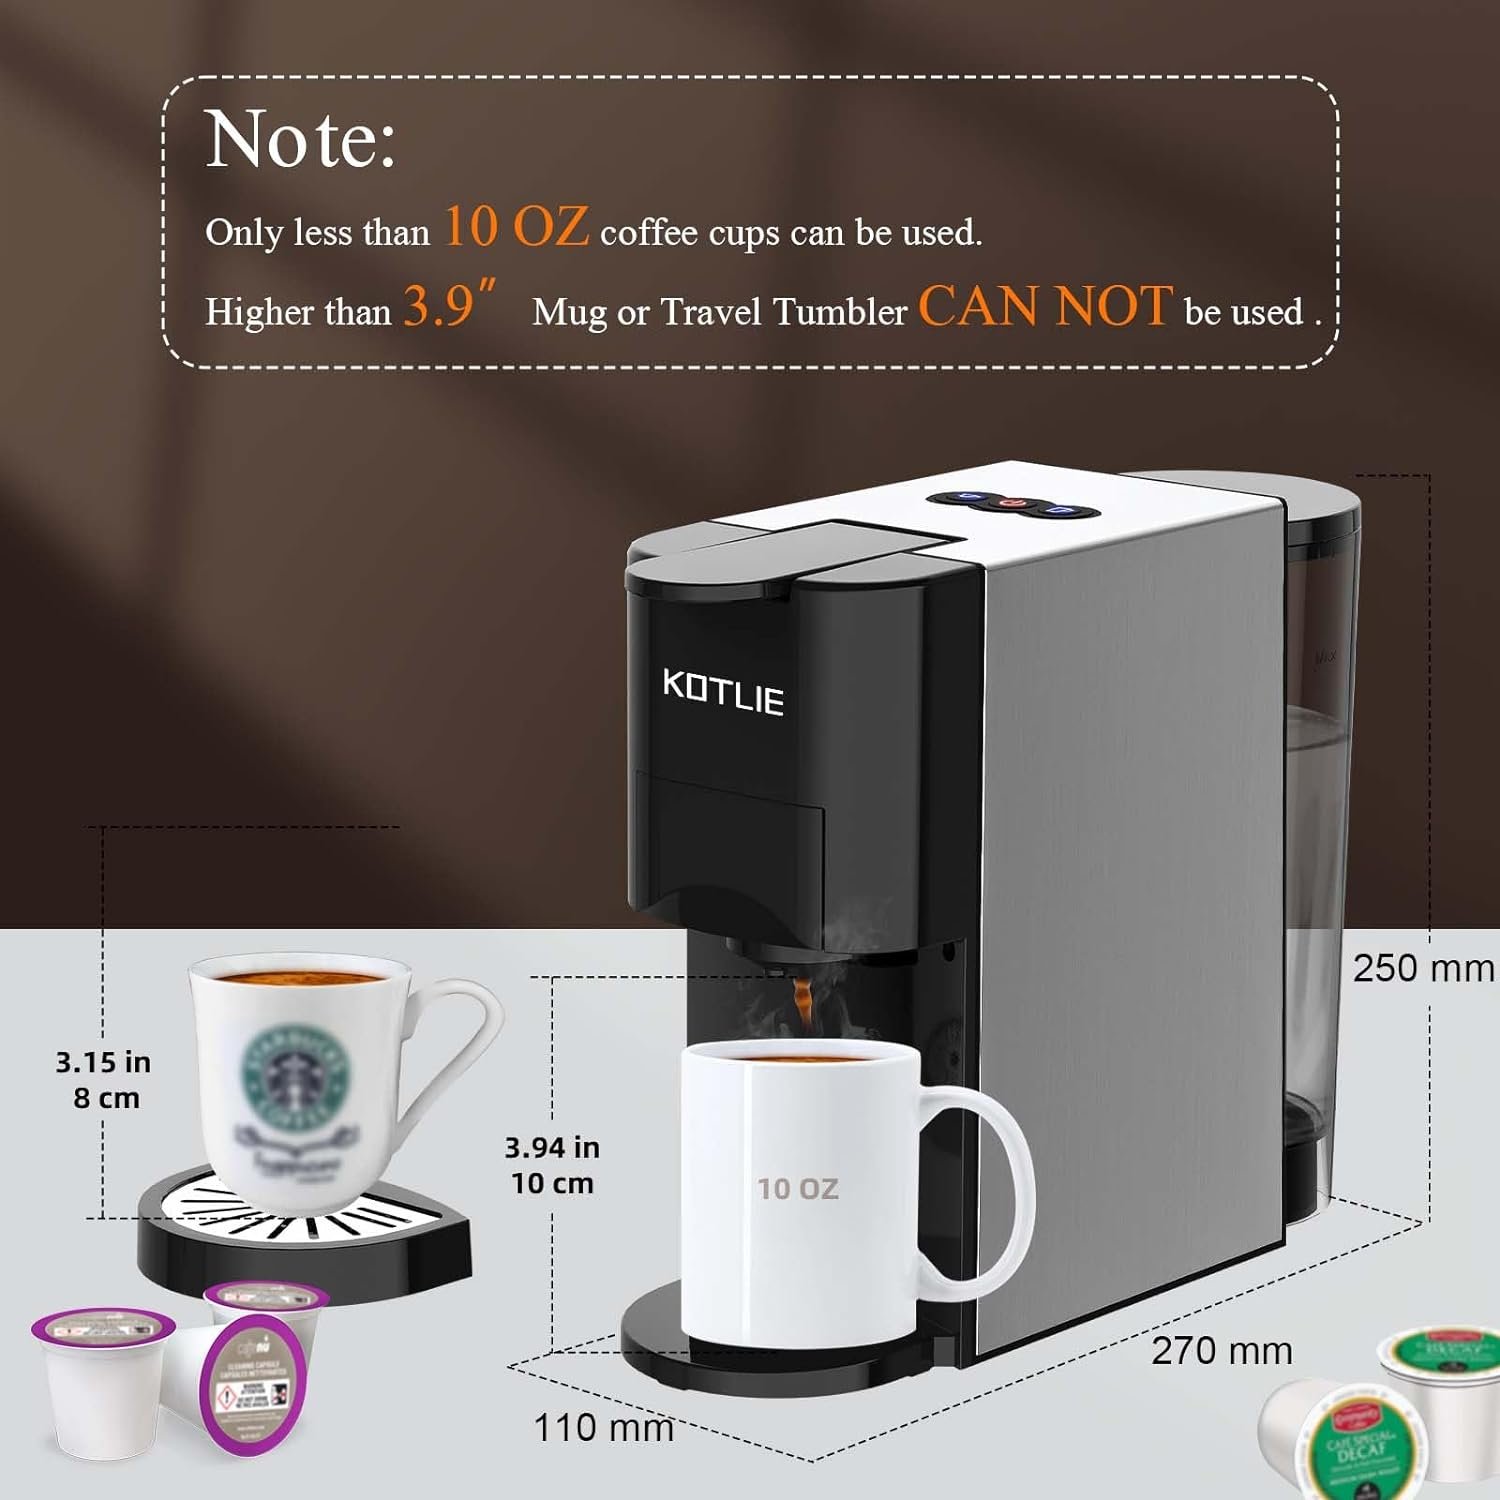 KOTLIE Single Serve Coffee Maker,4in1 Espresso Machine for Nespresso original/K cups/LOR/Ground Coffee/illy Coffee ESE,19Bar Espresso Maker,1450W Fast Heat Coffee Machine(Black)